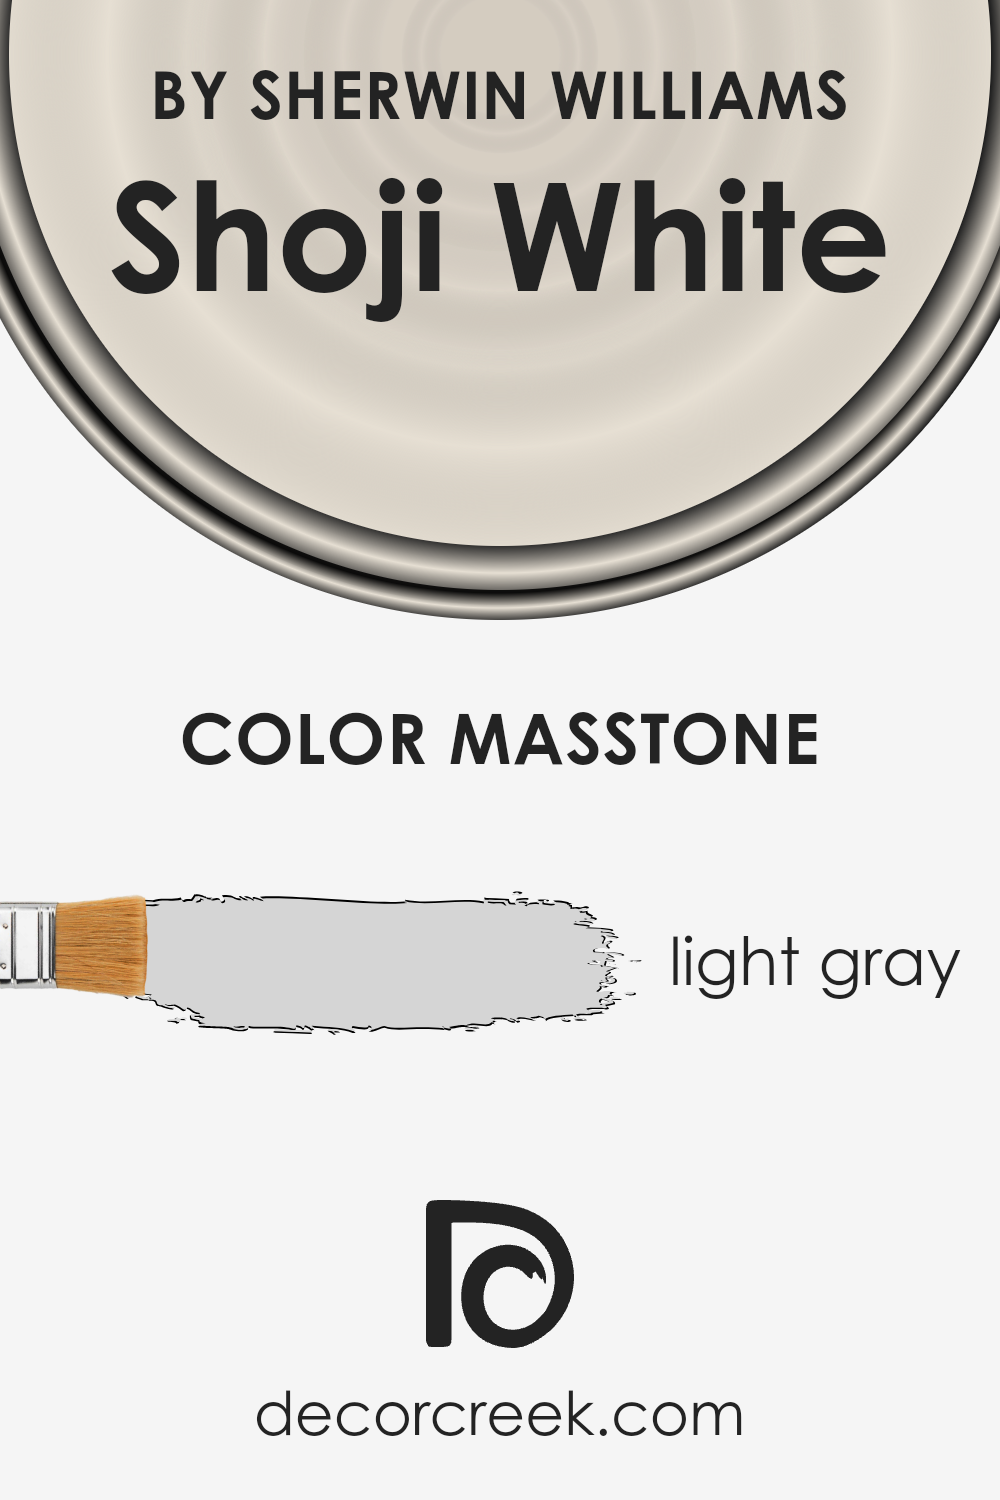 what_is_the_masstone_of_shoji_white_sw_7042